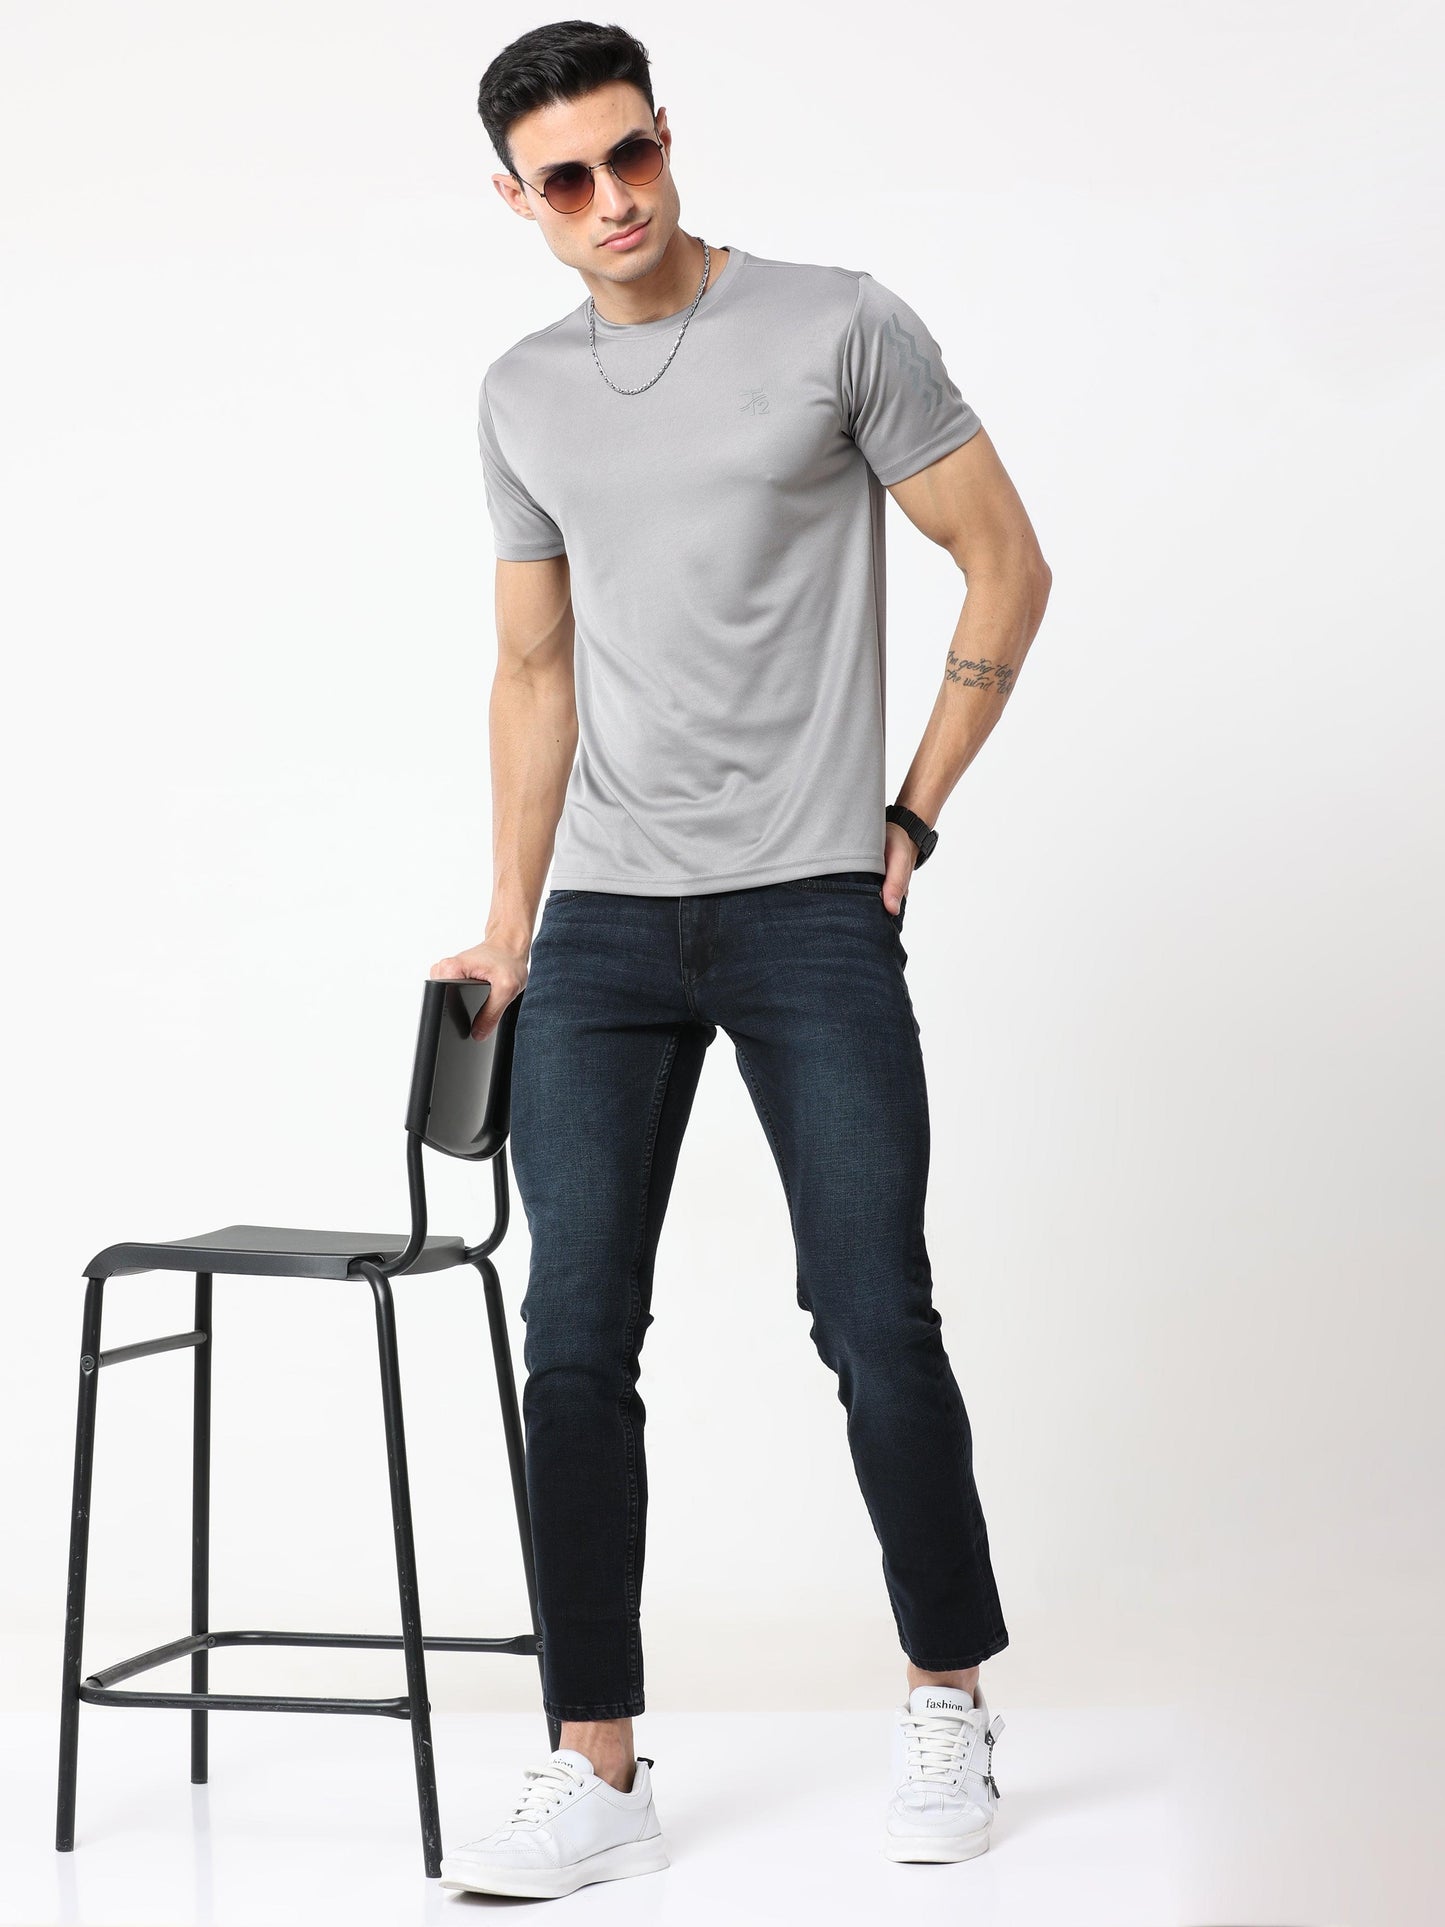 Athleisure Men's Premium T-Shirt – Grey